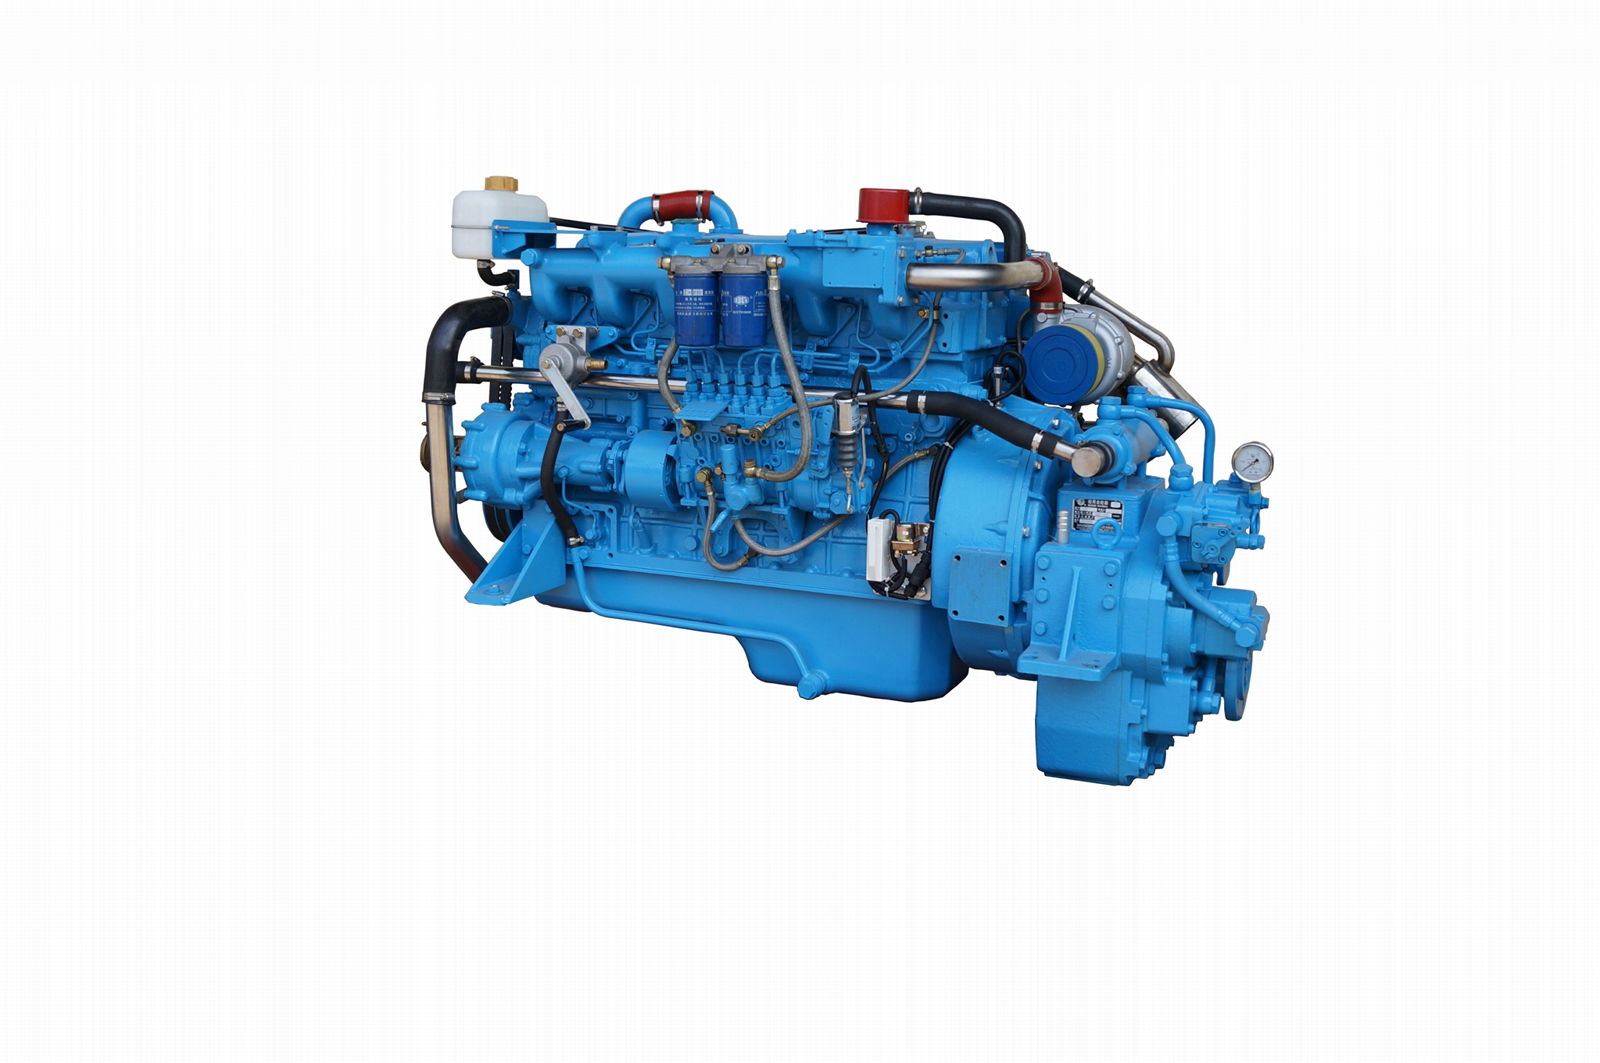  200Hp Inboard Marine Diesel Engine for Boat 3